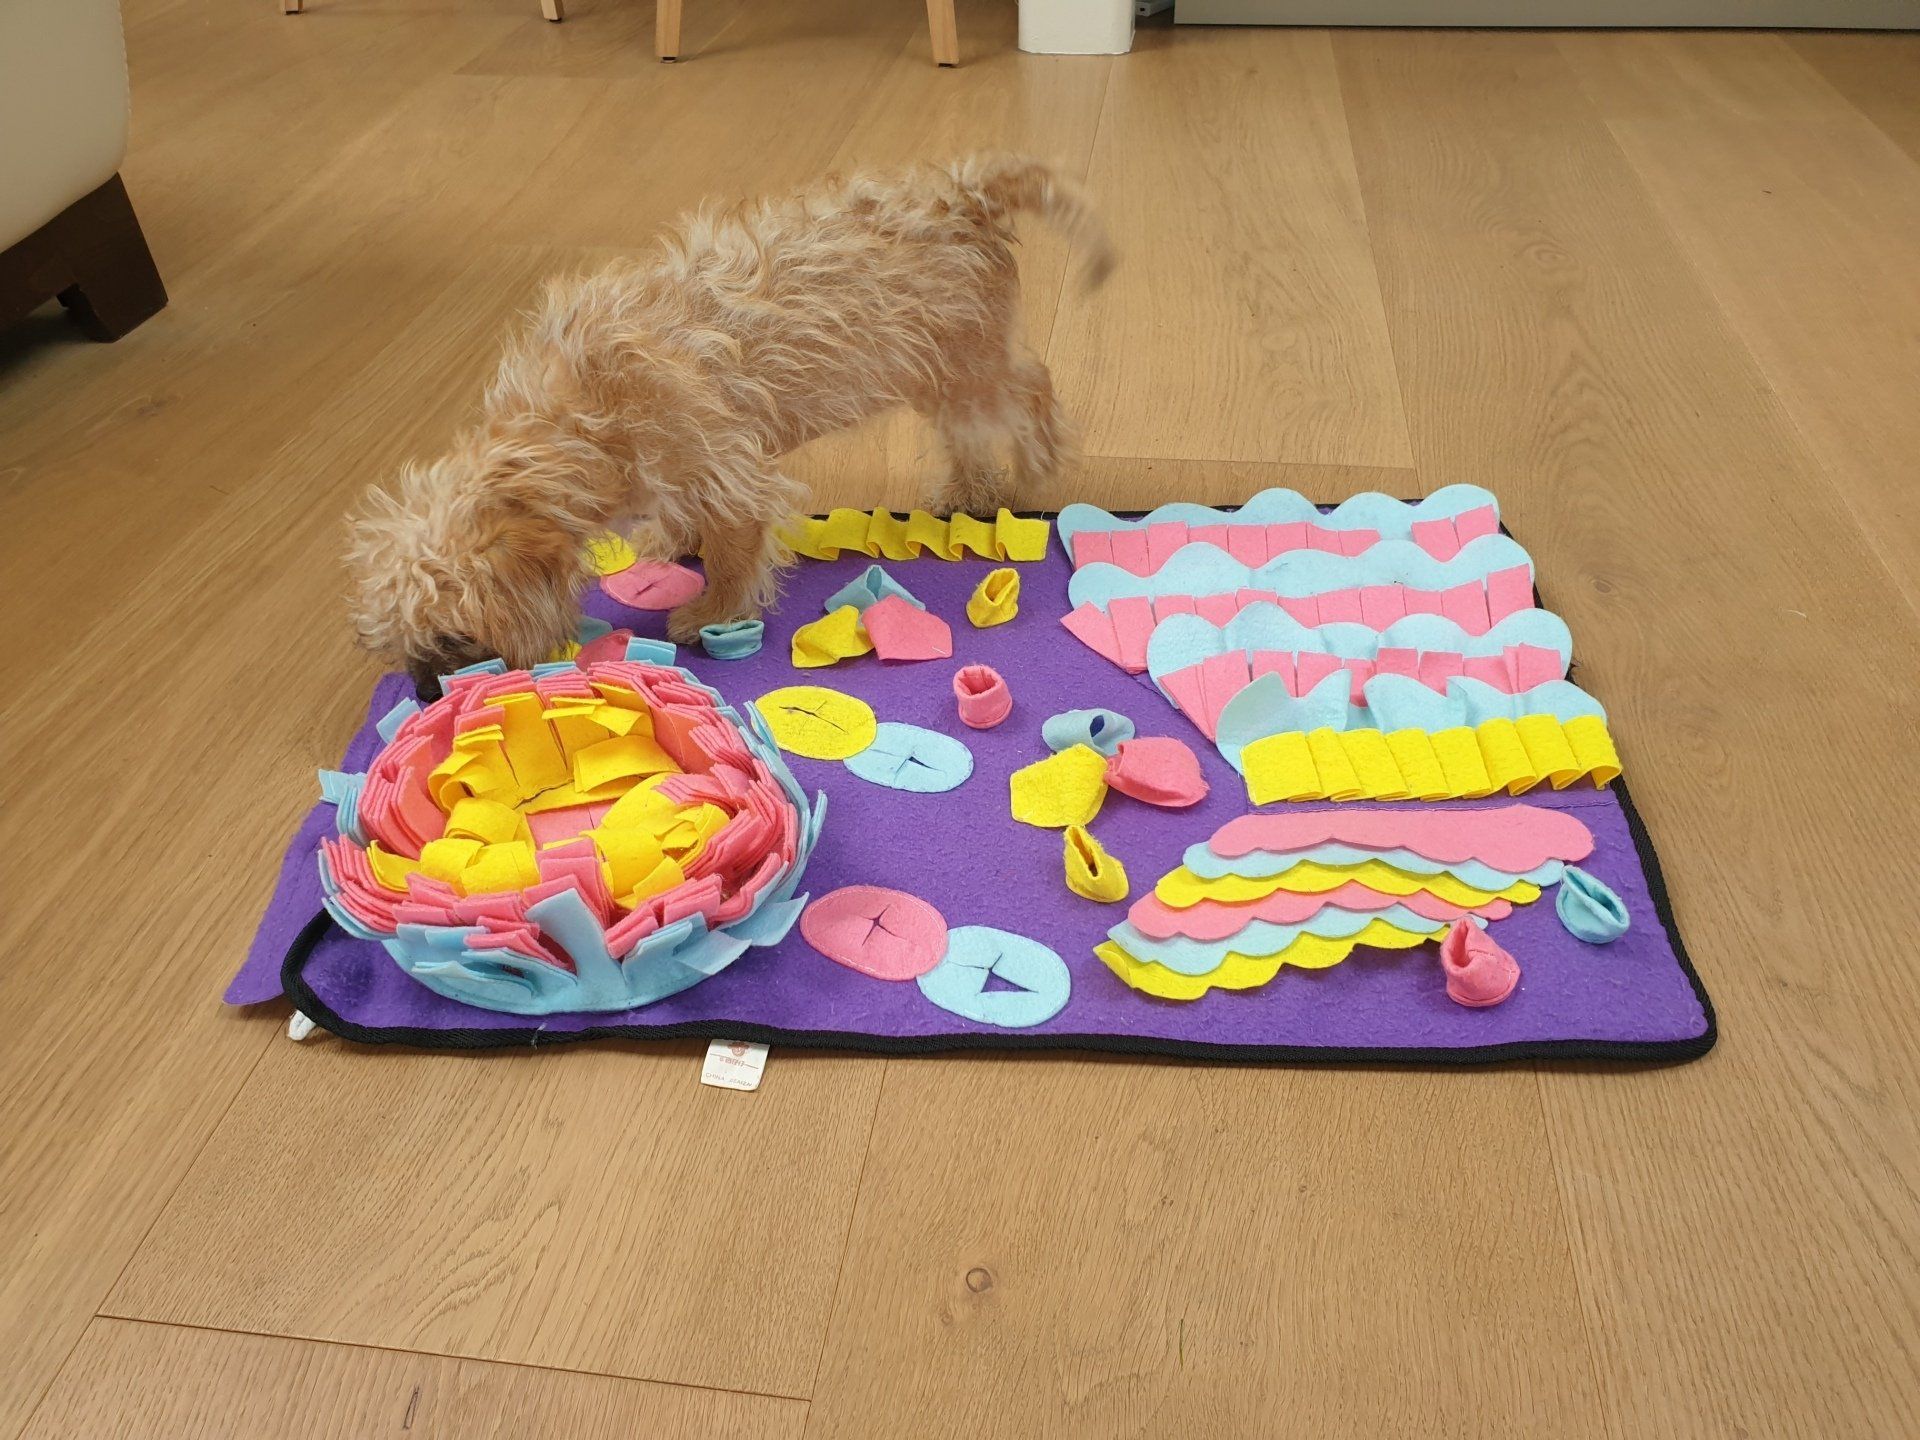 Small dog nosing through a dog sniff mat.